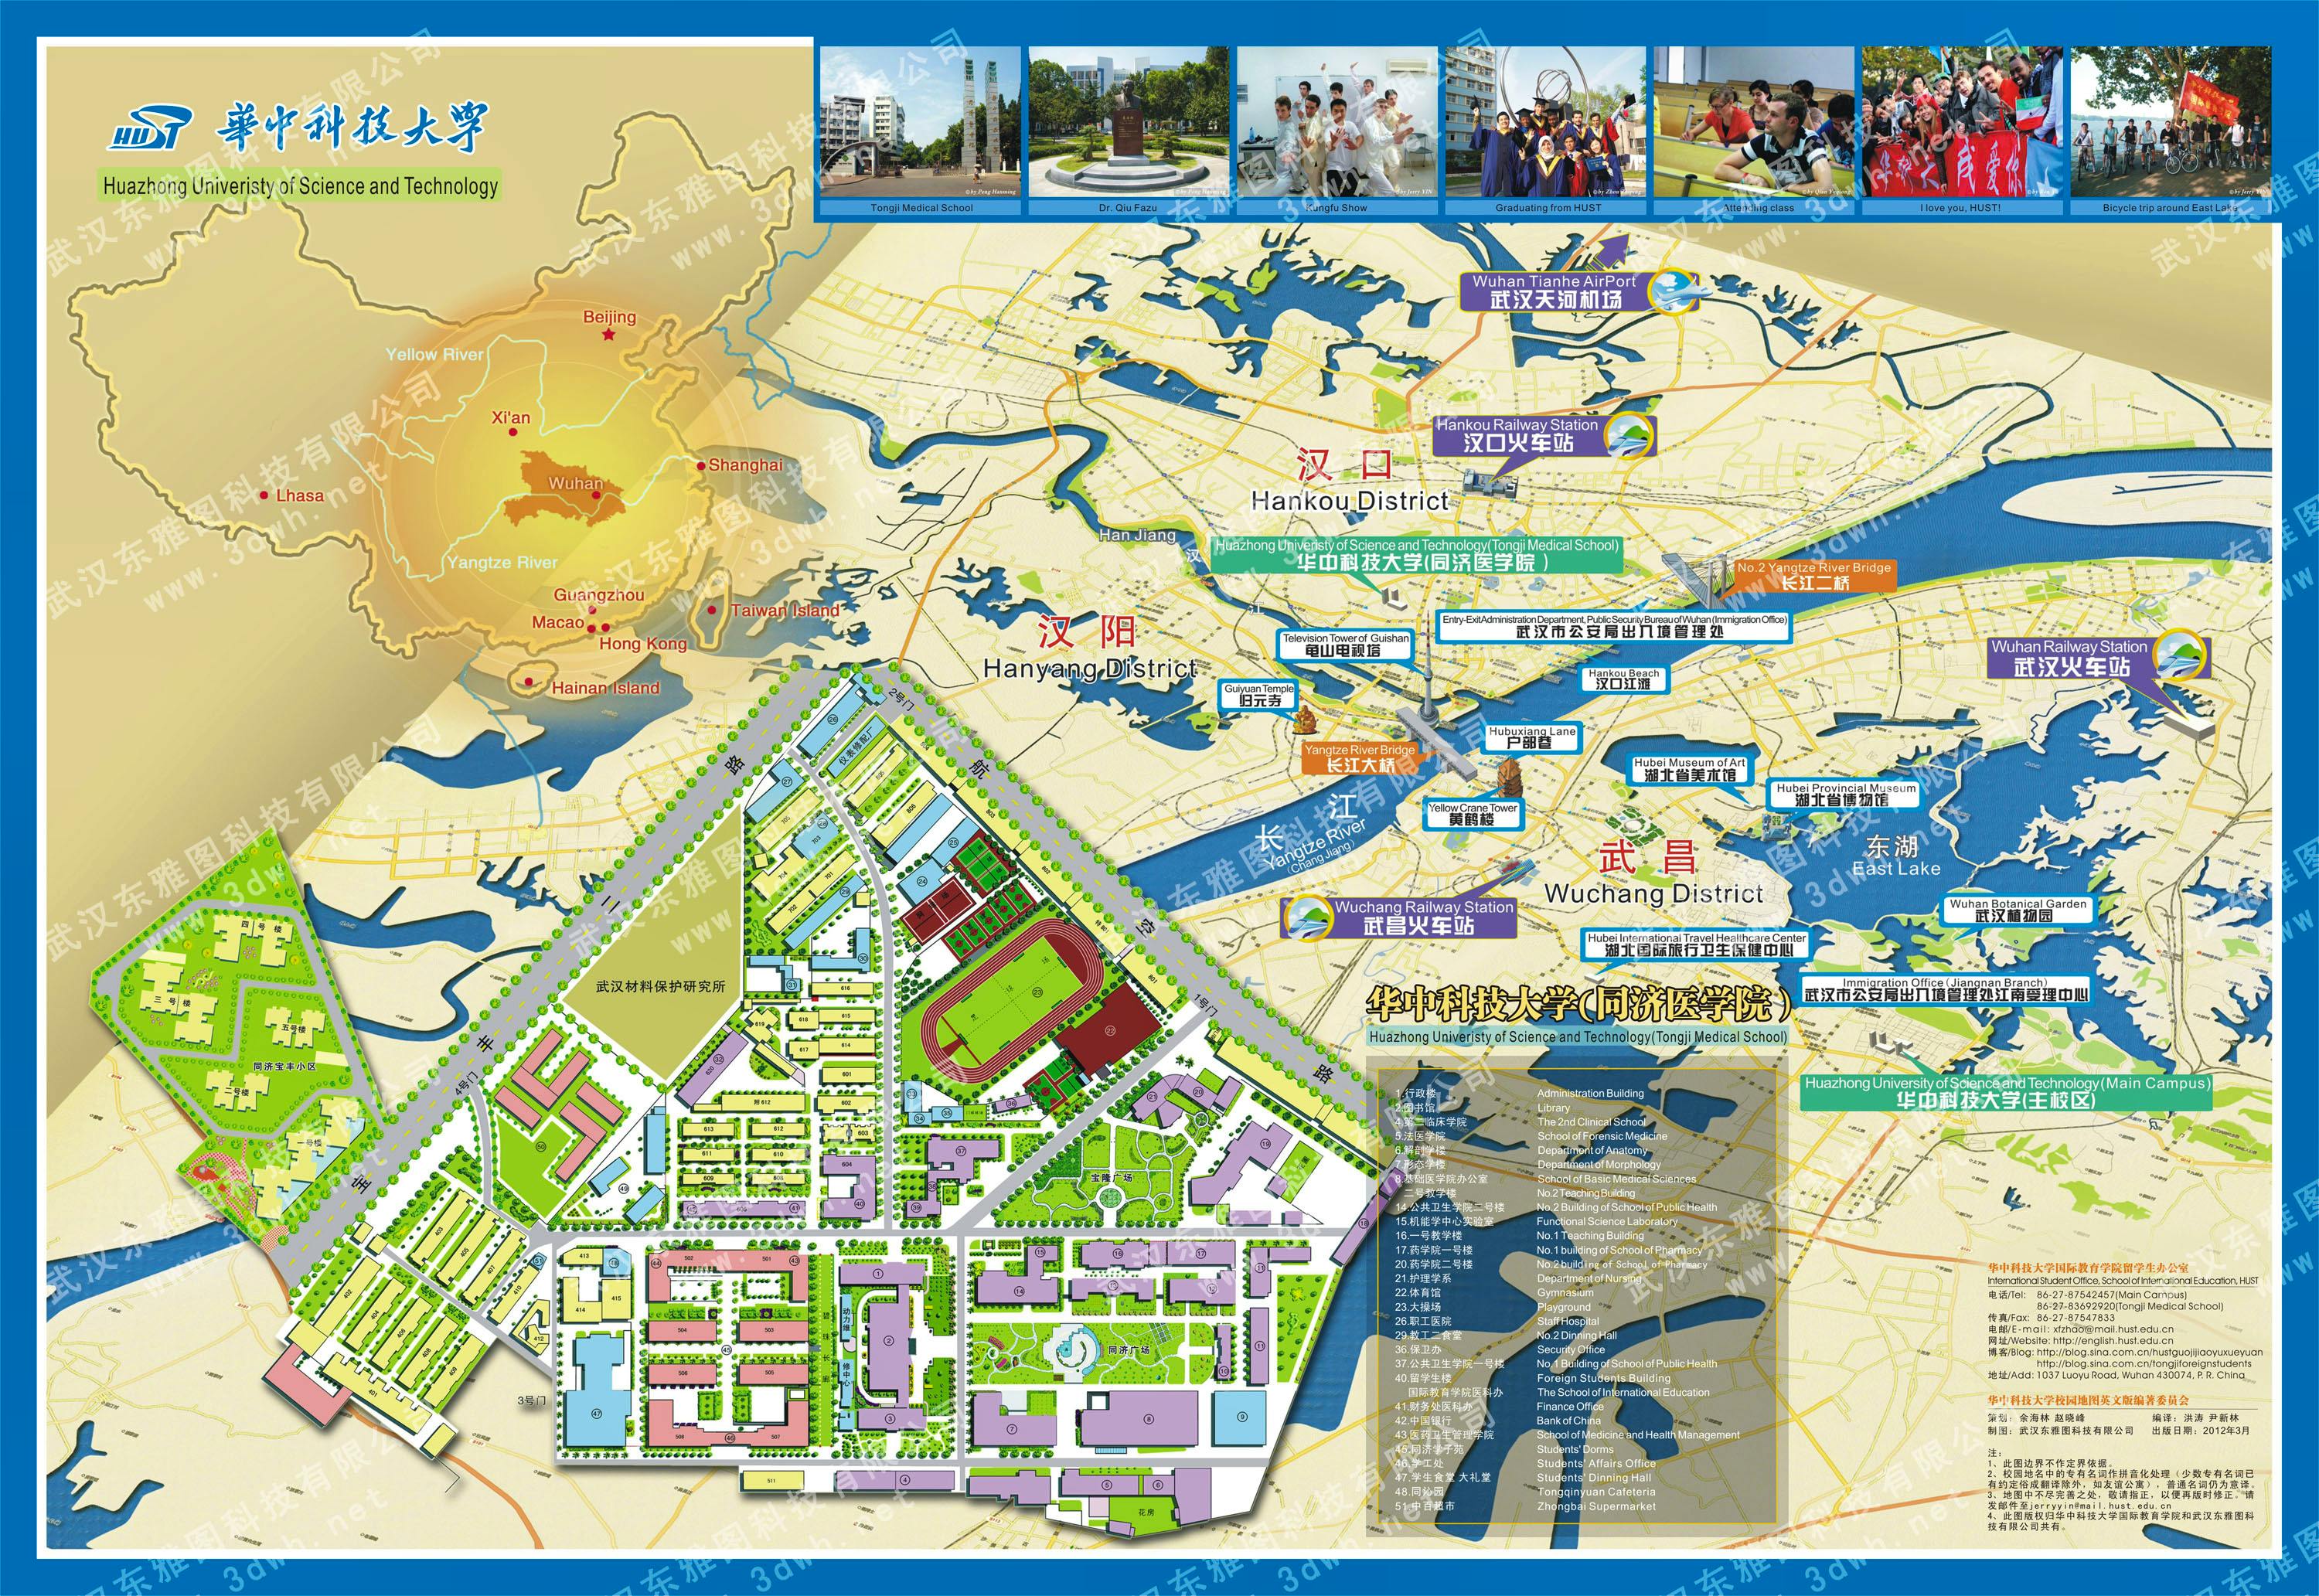 Maps of HUST (Tongji Medical College)